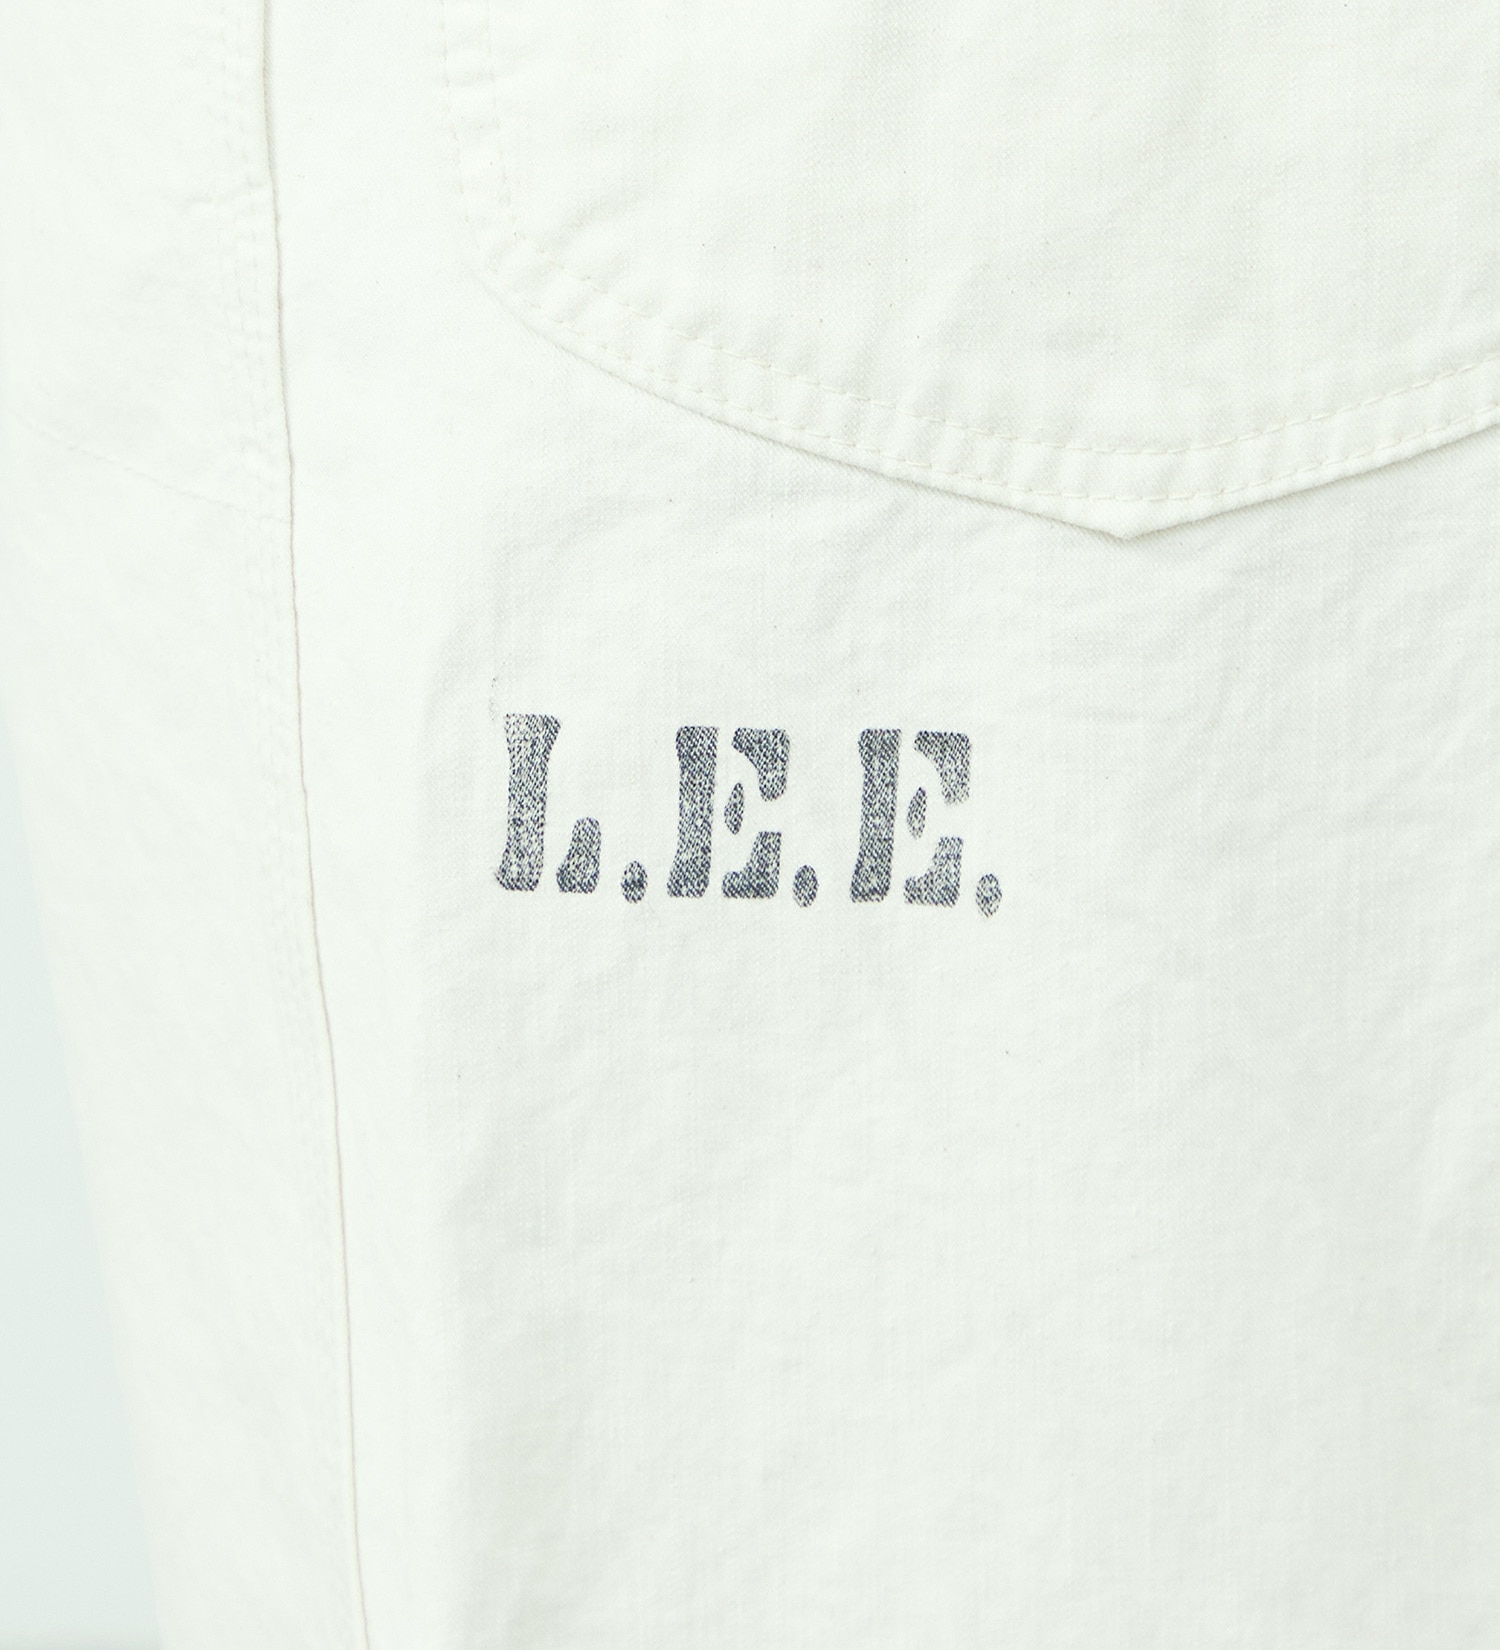 Lee(リー)のDUNGAREES ローバック オーバーオール|オールインワン/サロペット/オーバーオール/レディース|アイボリー